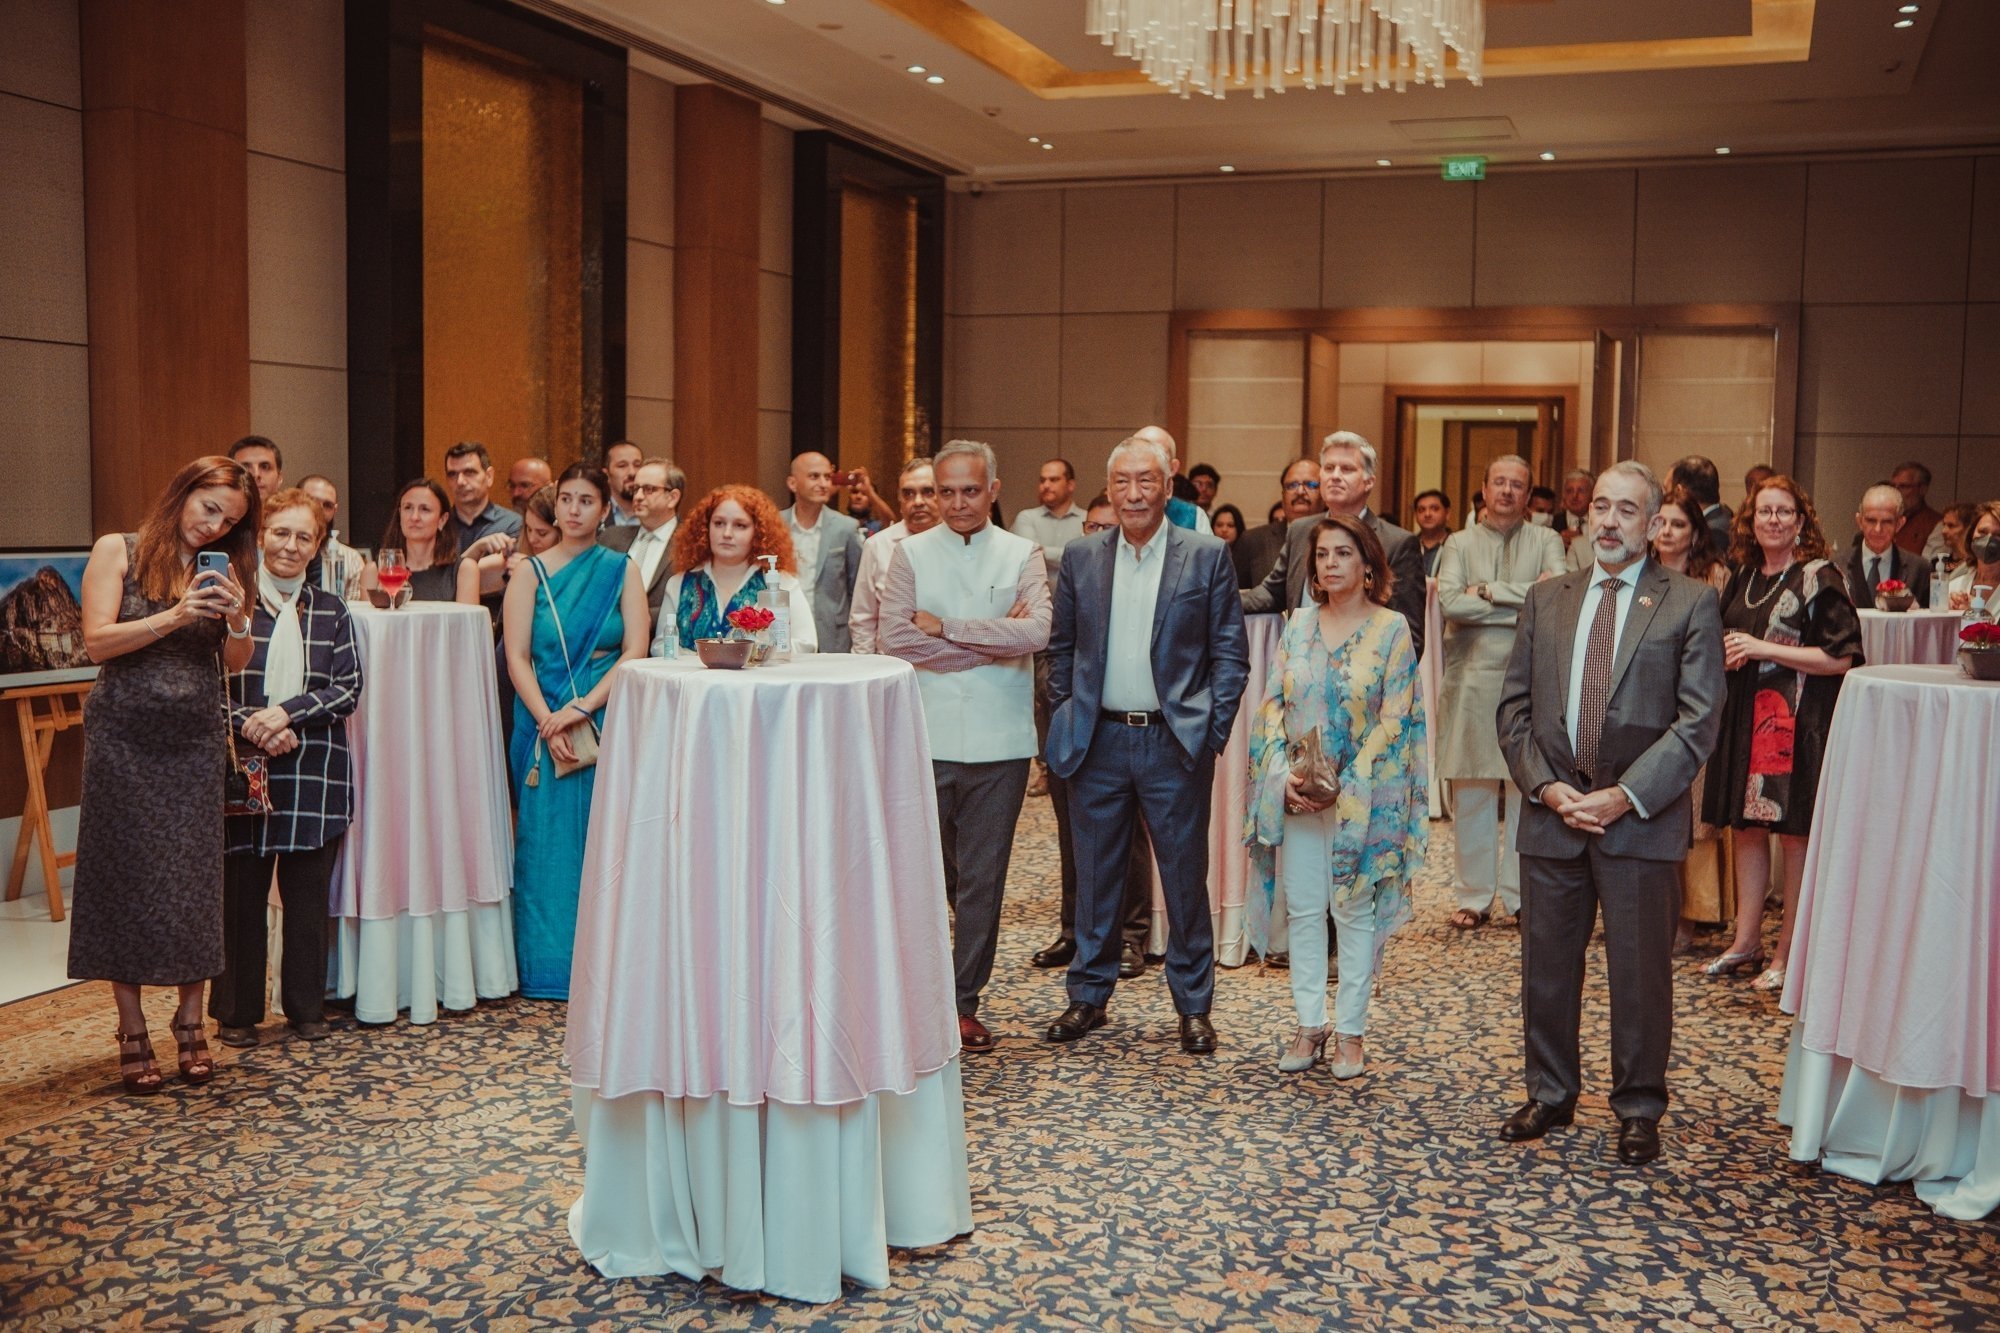 Peserta memposting foto saat acara pertama Pekan Masakan Turki yang diadakan di India di Hotel Oberoi, yang diselenggarakan oleh Kedutaan Besar Turki di New Delhi, 21-27 Mei.  (Foto AA)